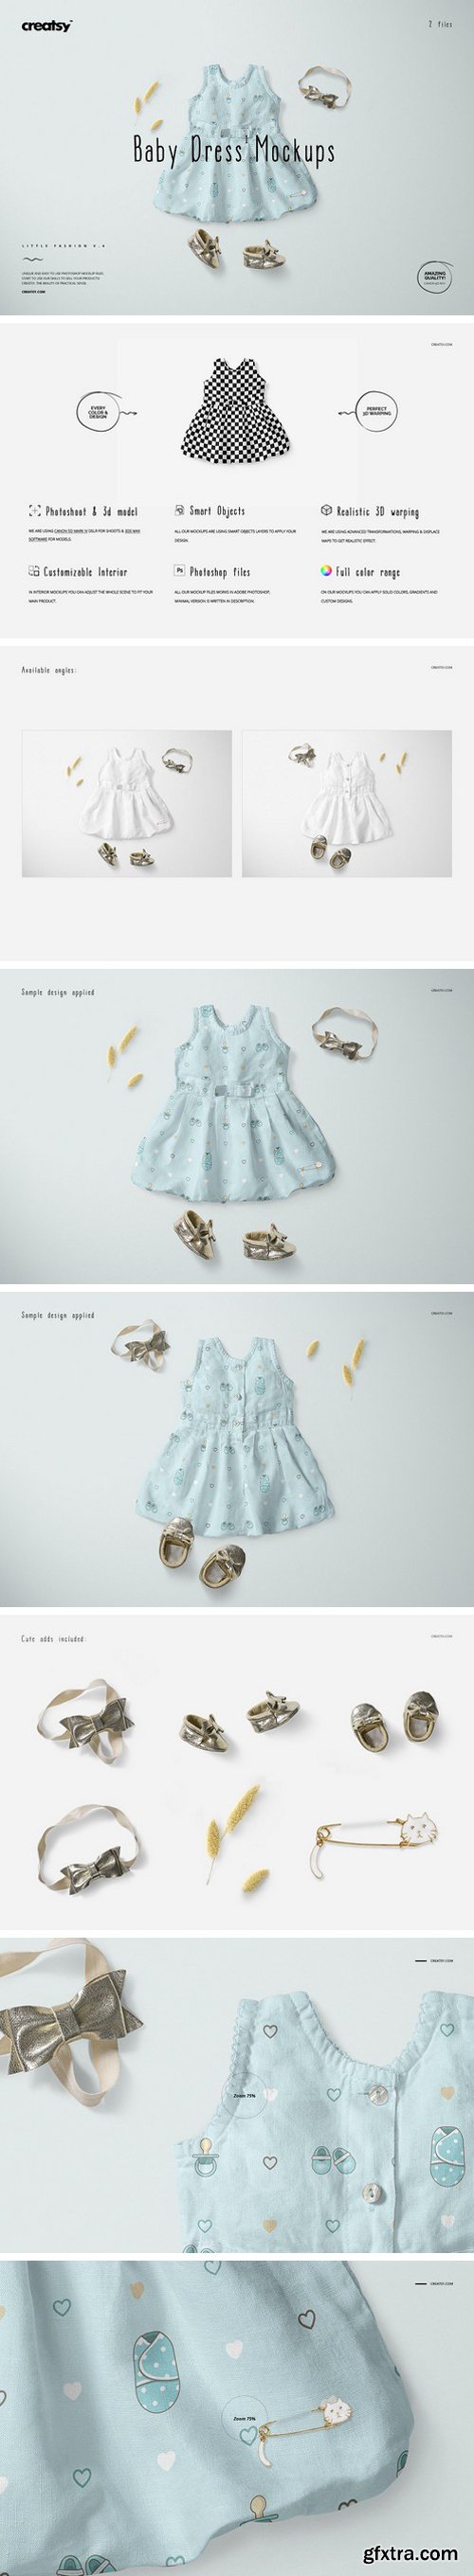 CM - Baby Dress Mockup Set 1 2406325